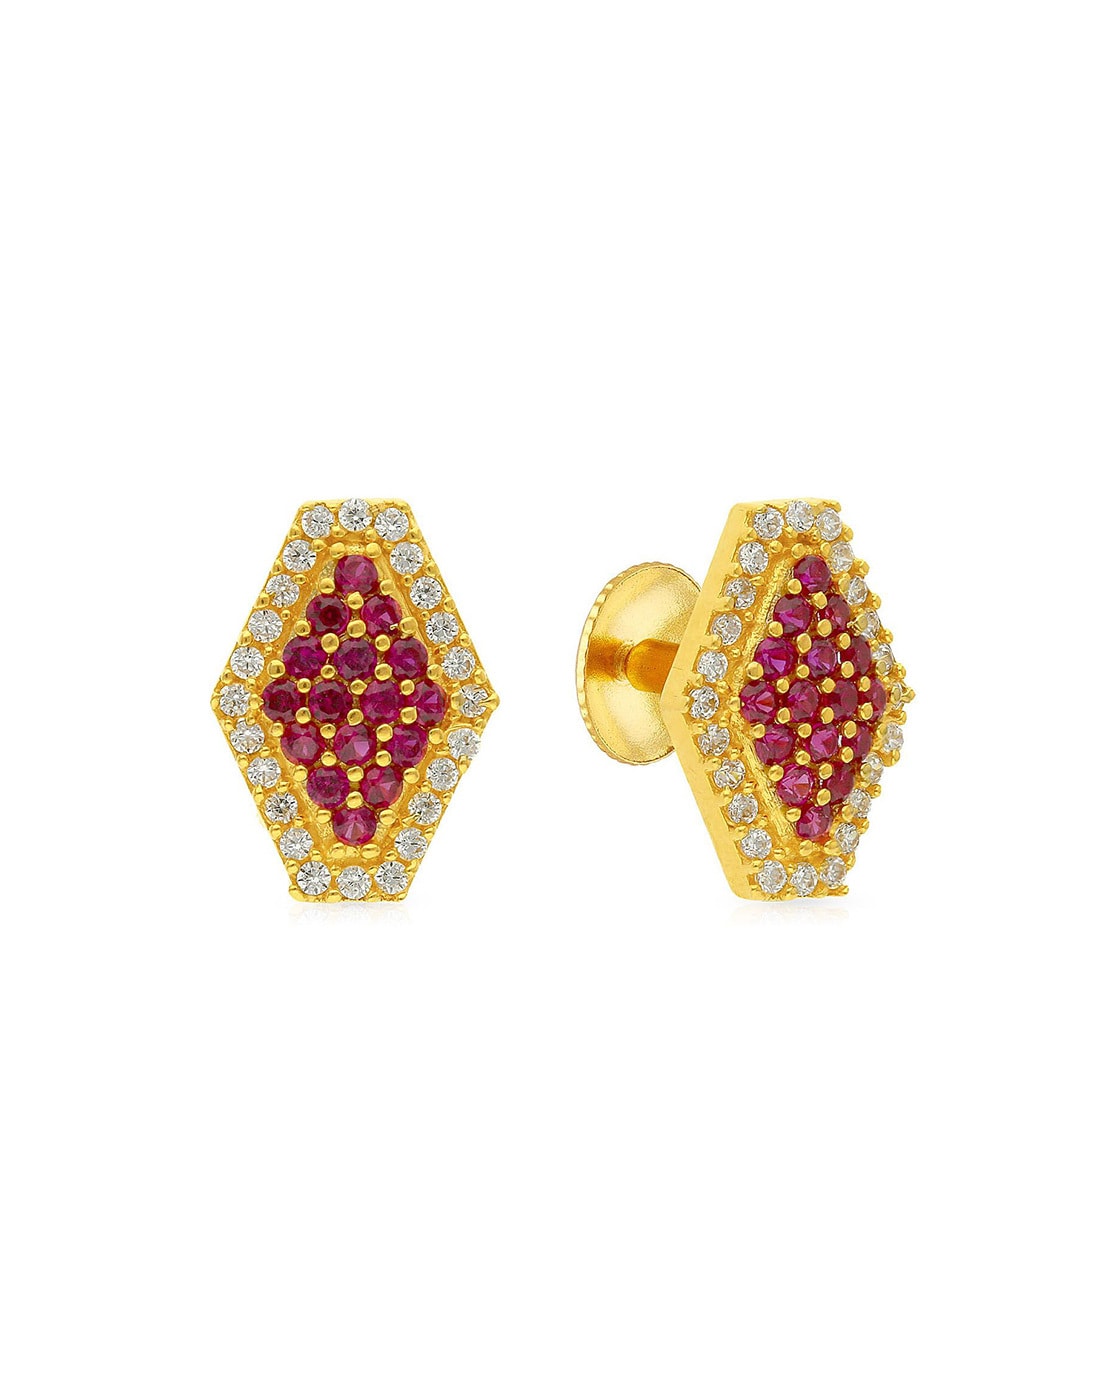 Buy quality Antique 22k gold earrings design in Pune